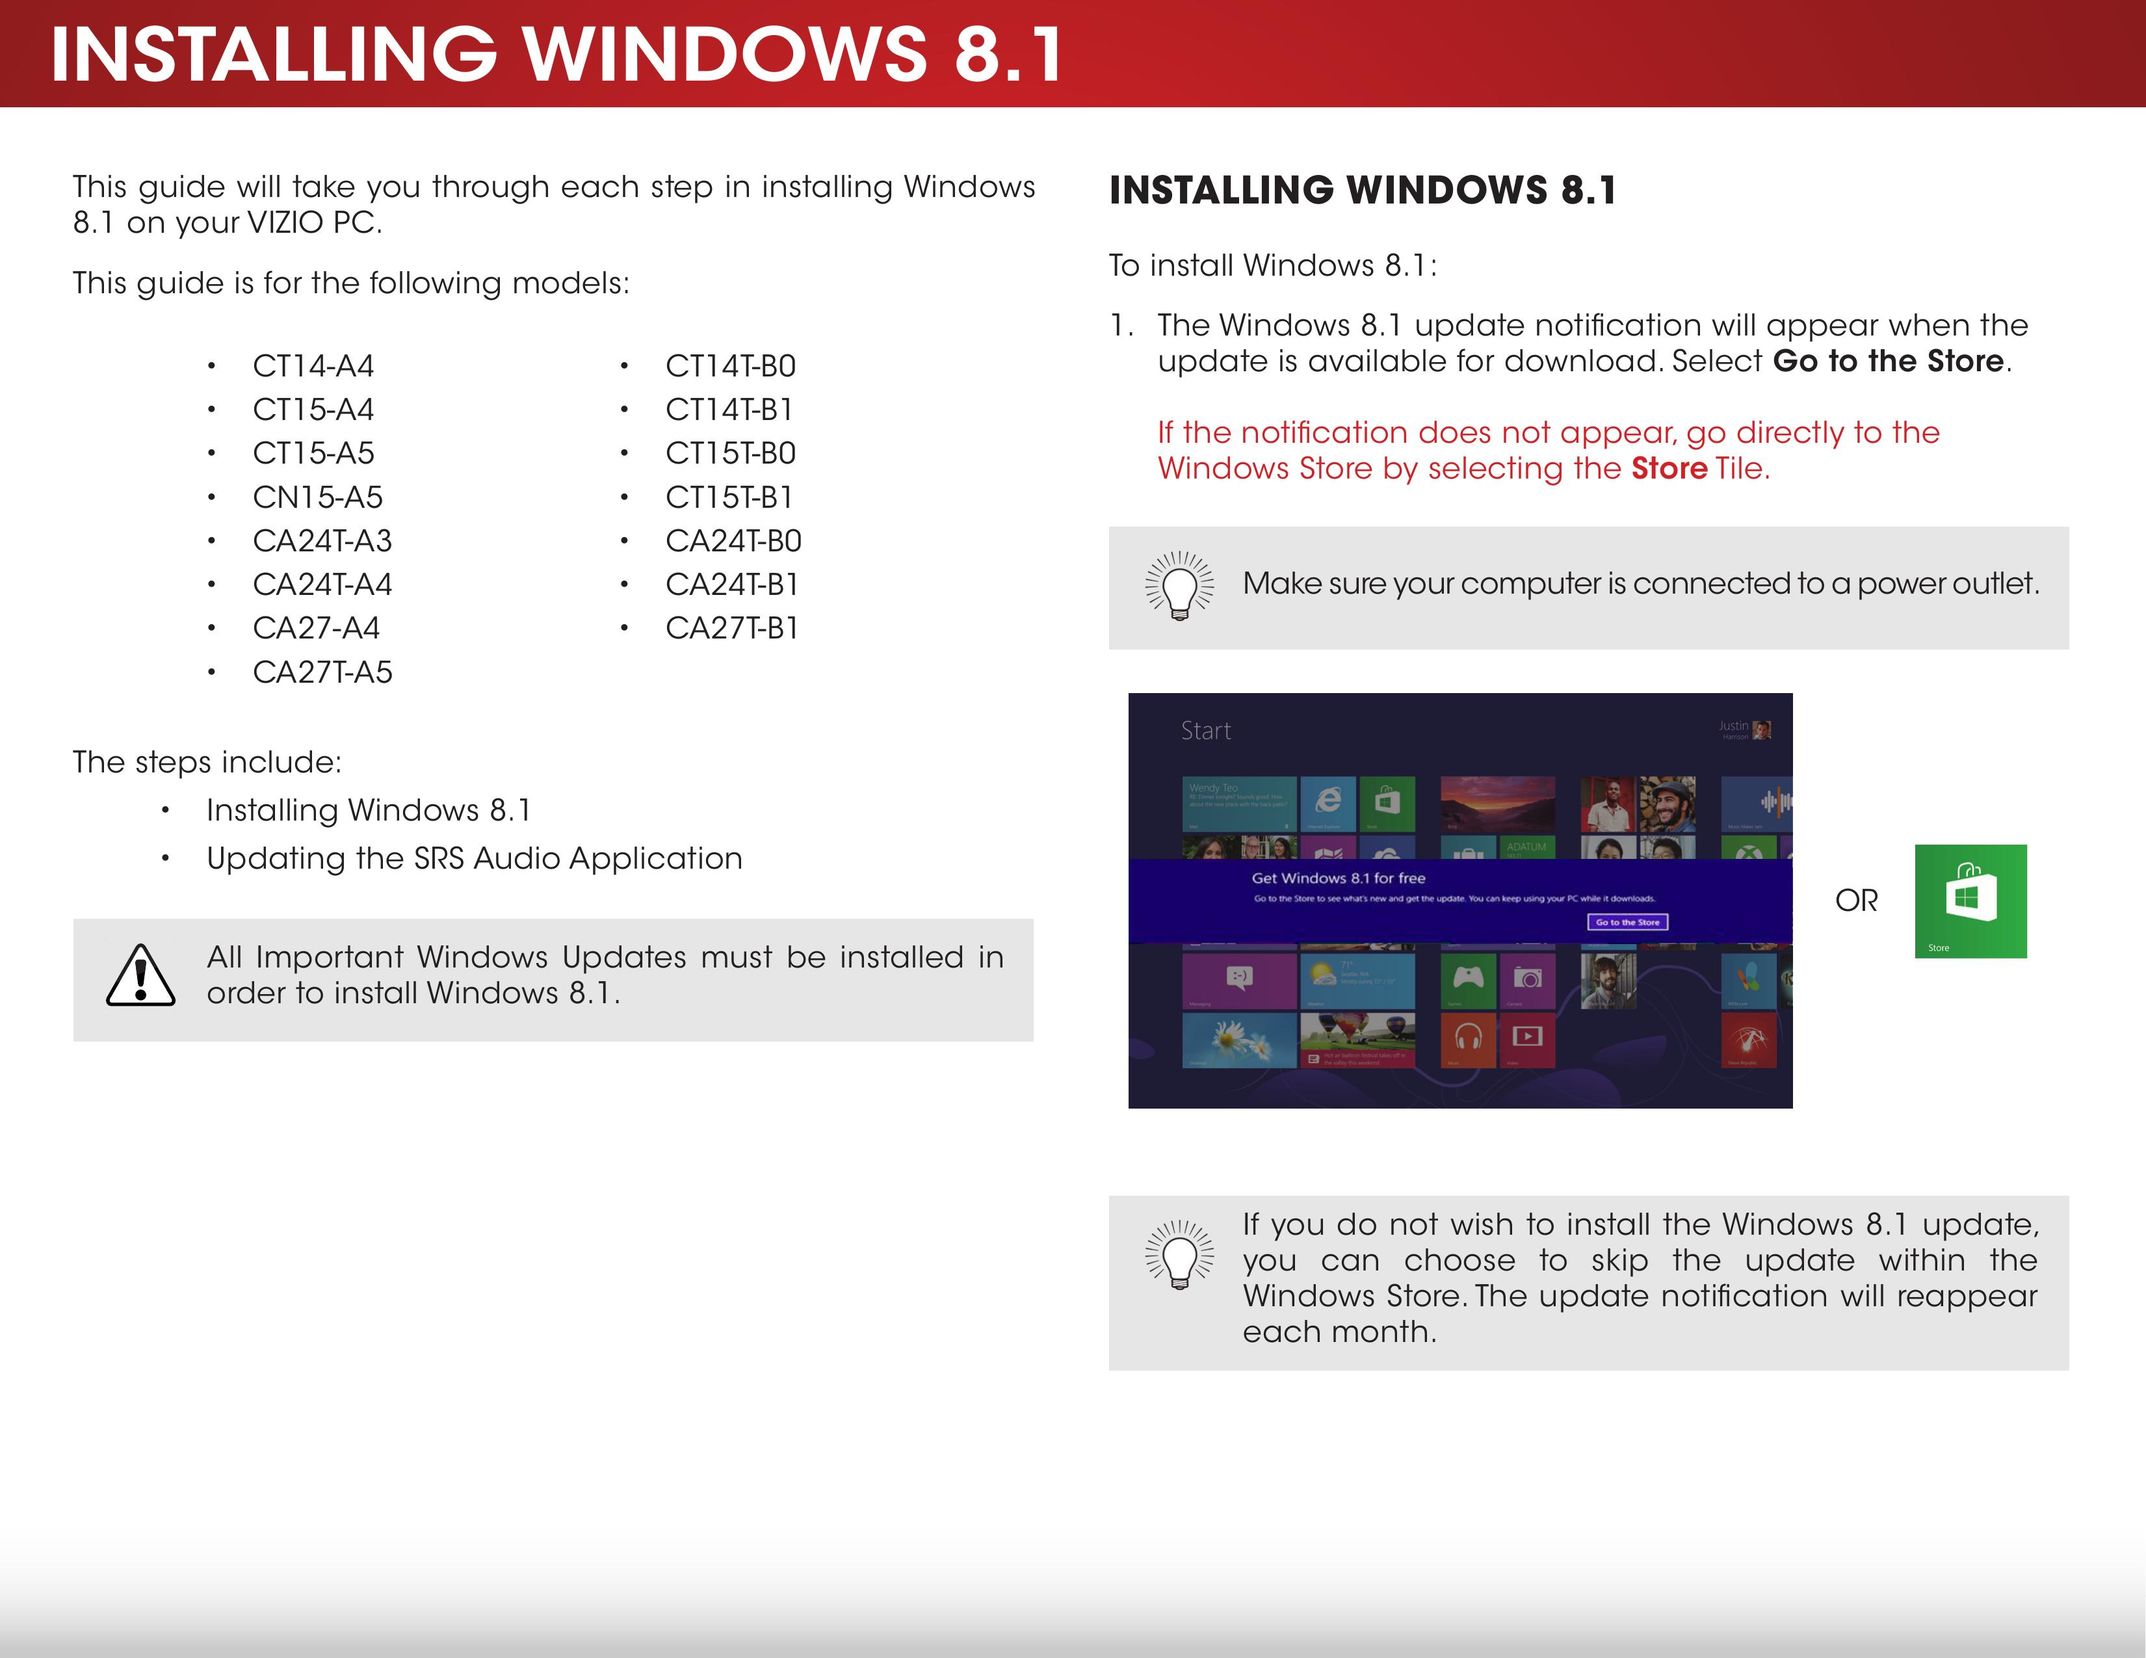 Microsoft CT15-A5 Window User Manual